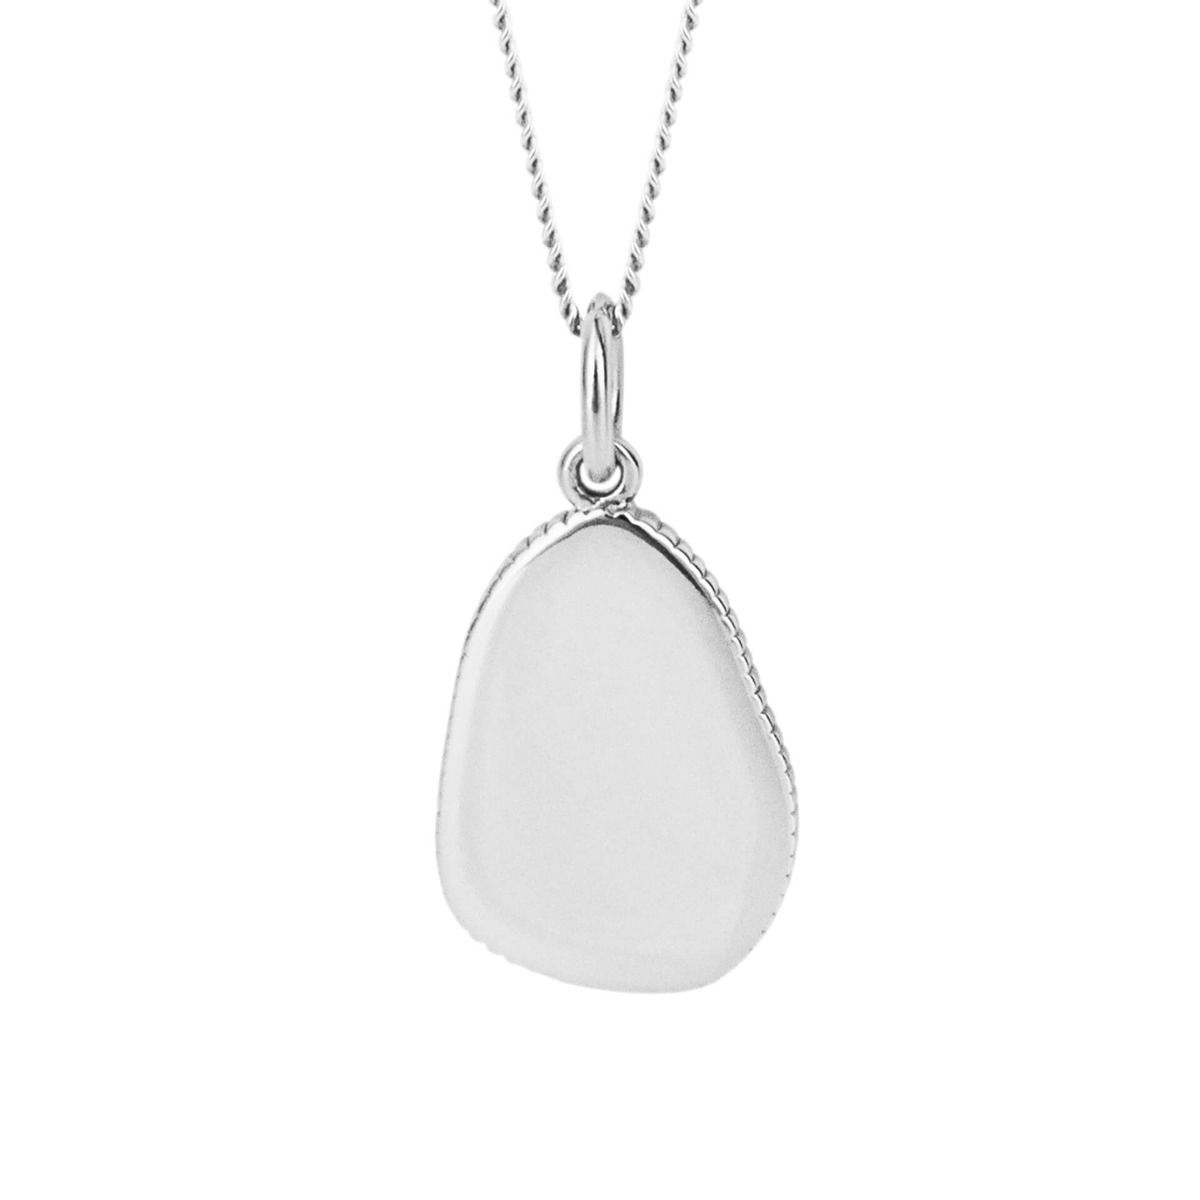 Fiorelli silver misshaped oval pendant